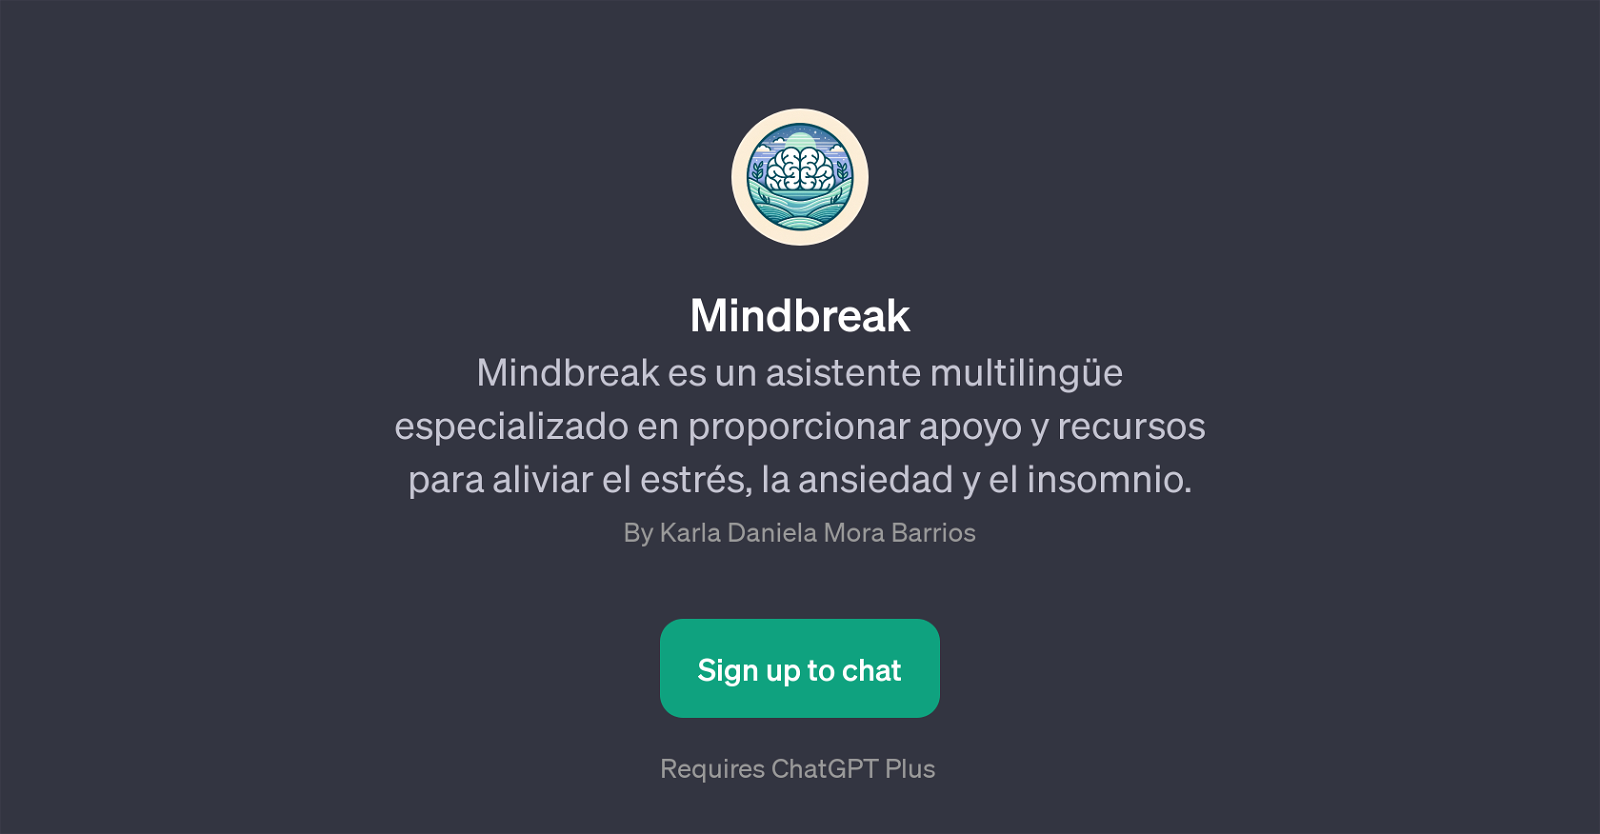 Mindbreak website